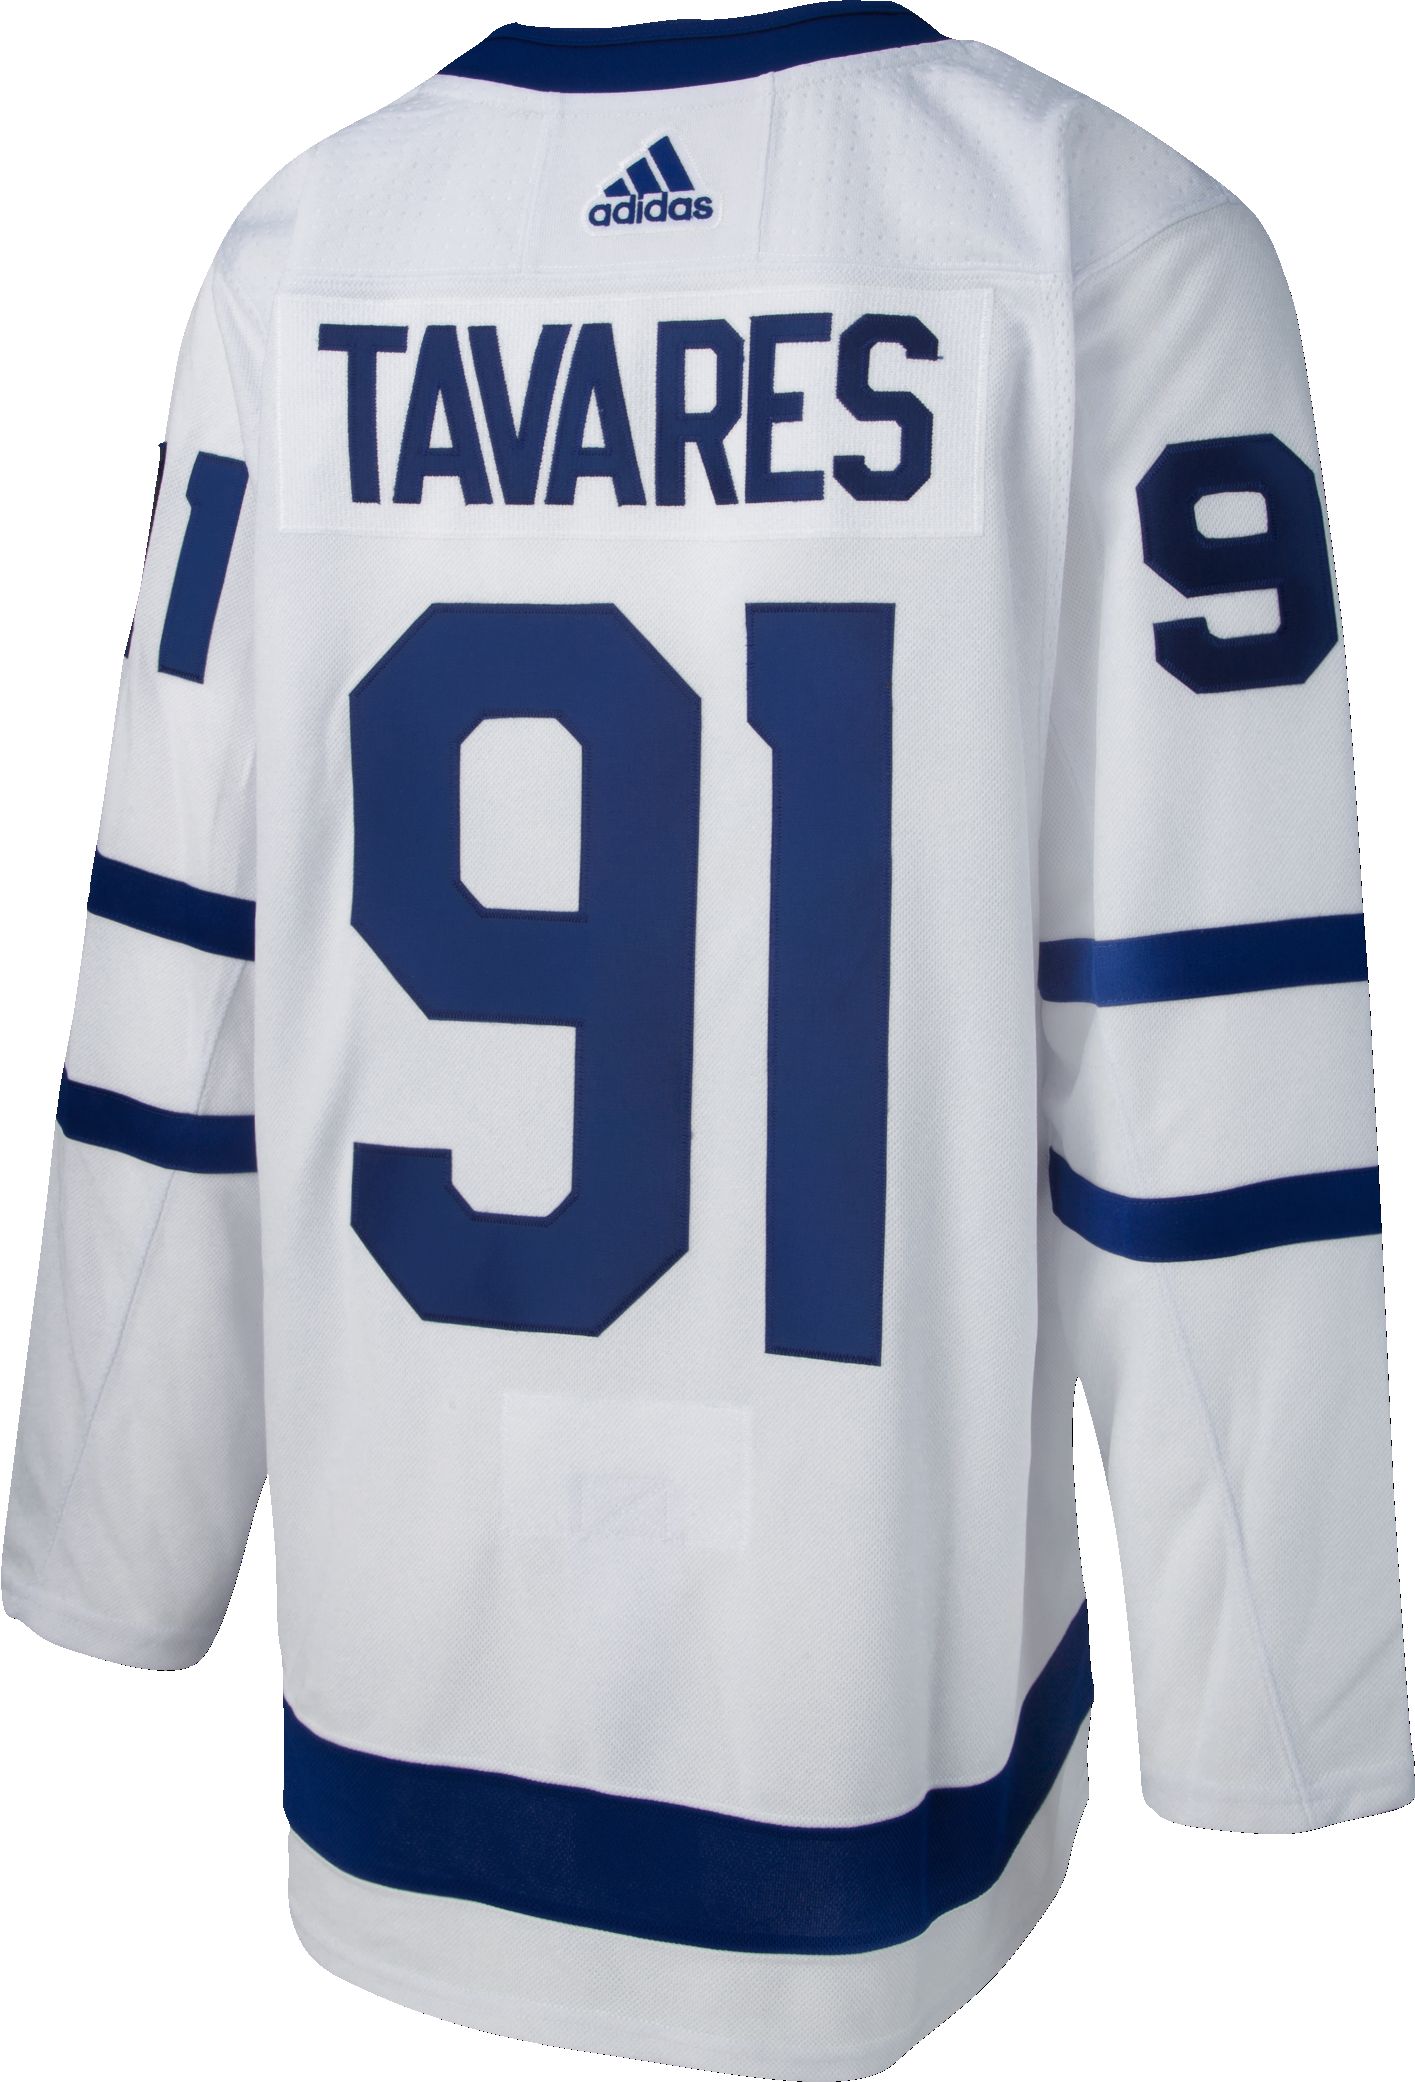 John Tavares Signed Jersey Toronto Maple Leafs Blue Pro Adidas with C